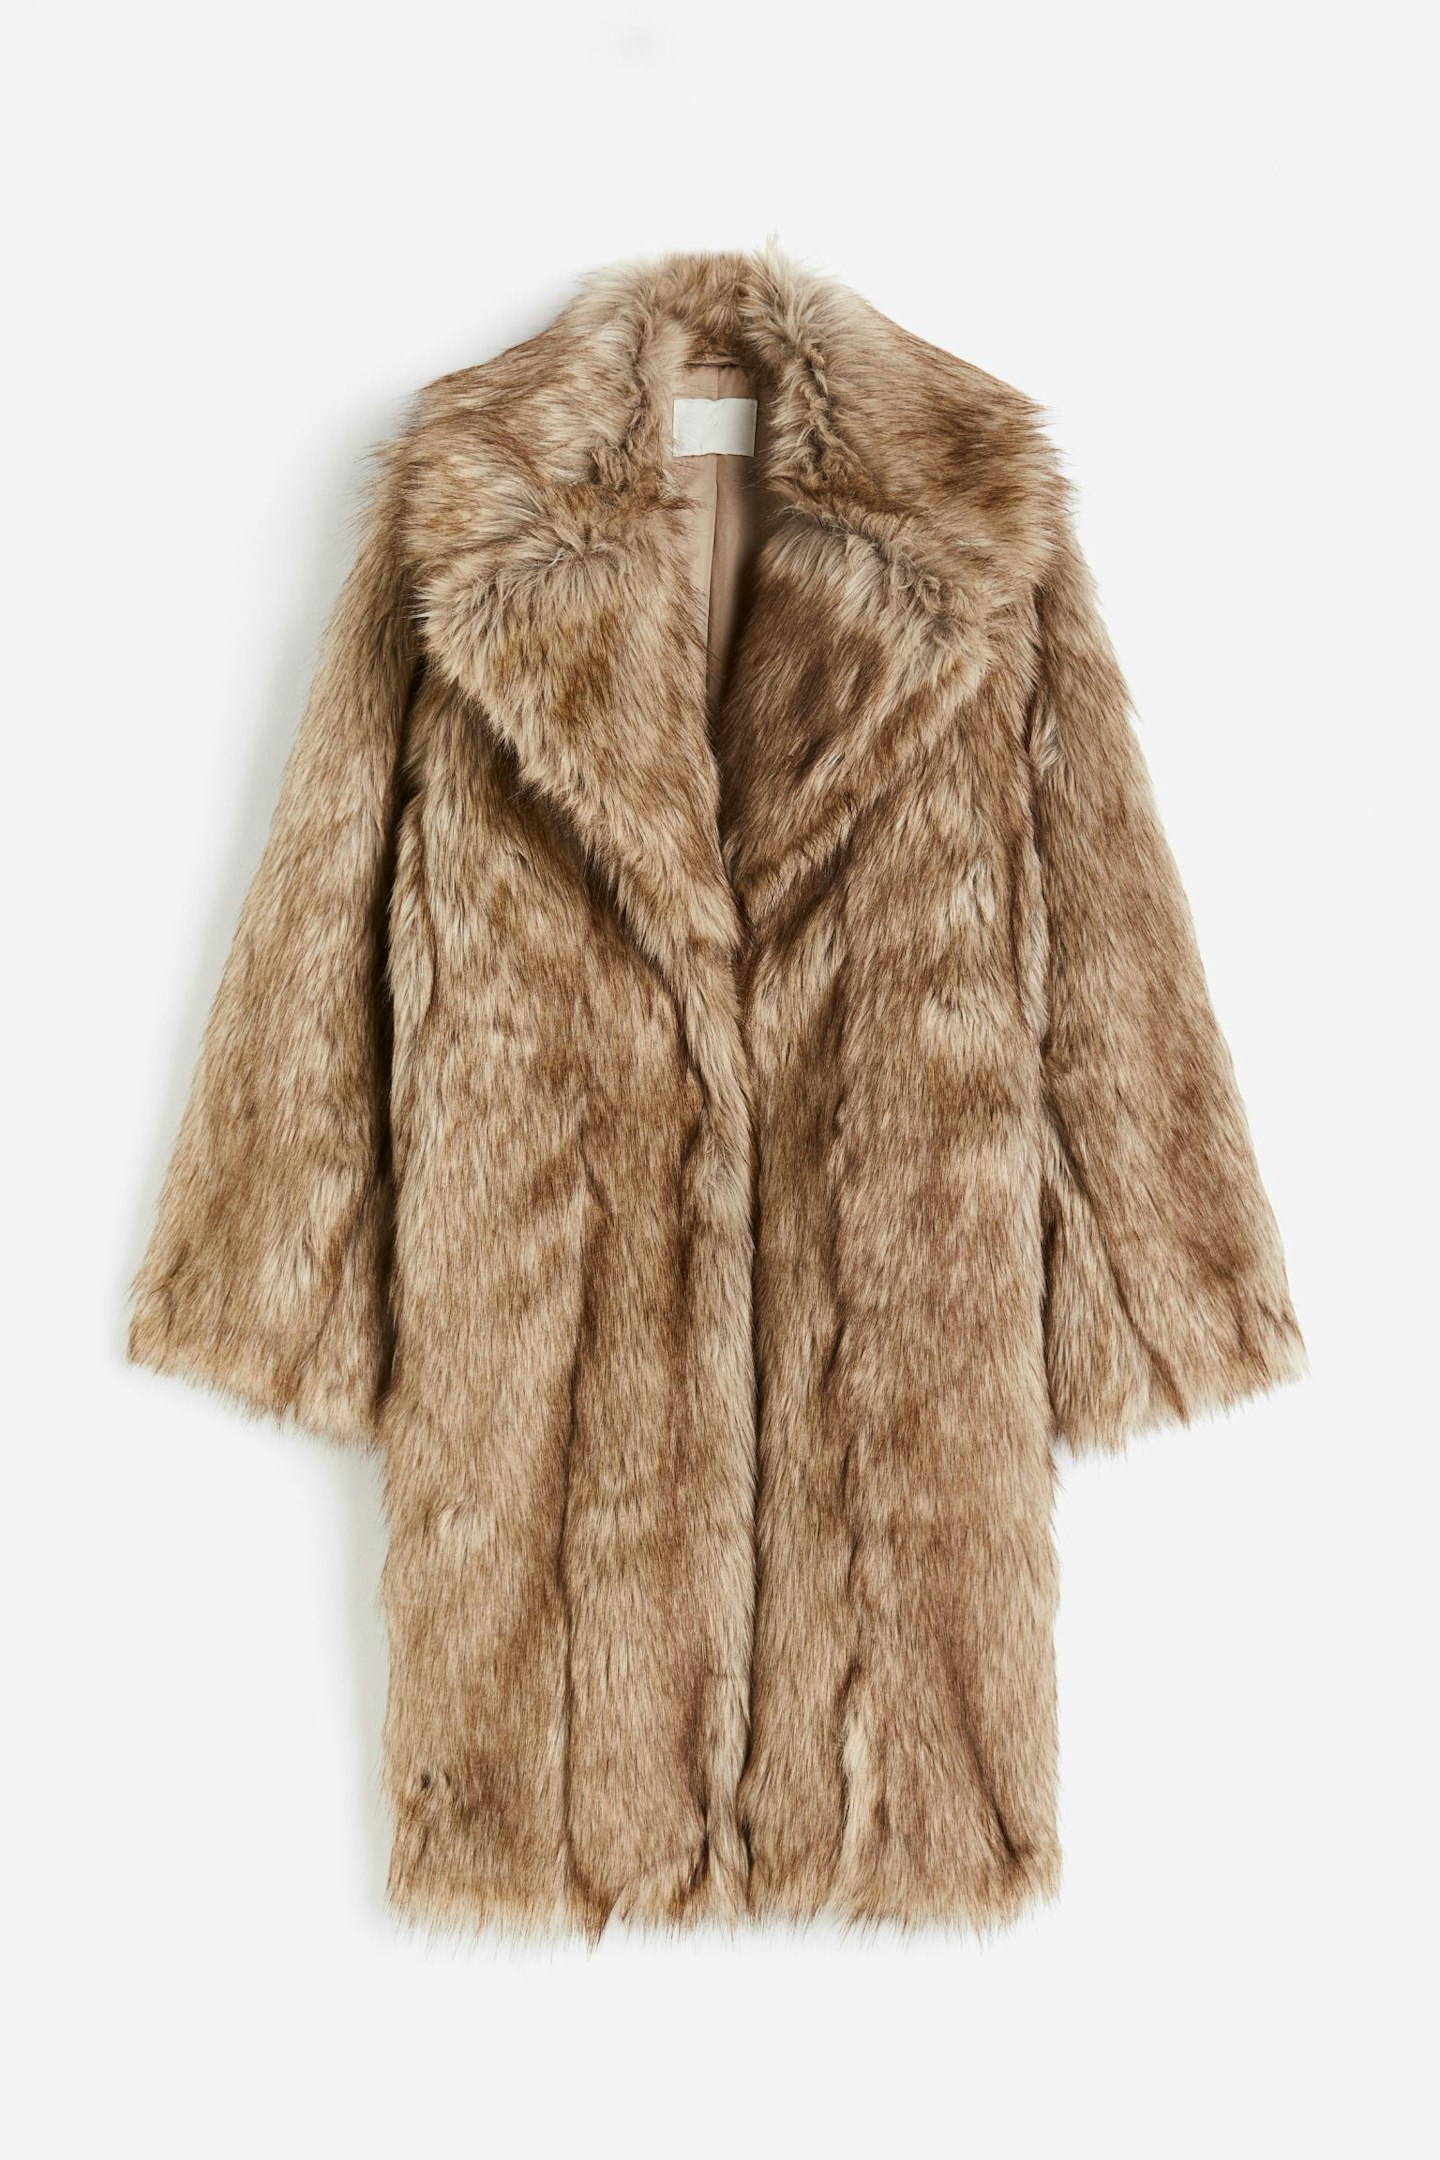 H&M Fluffy Coat